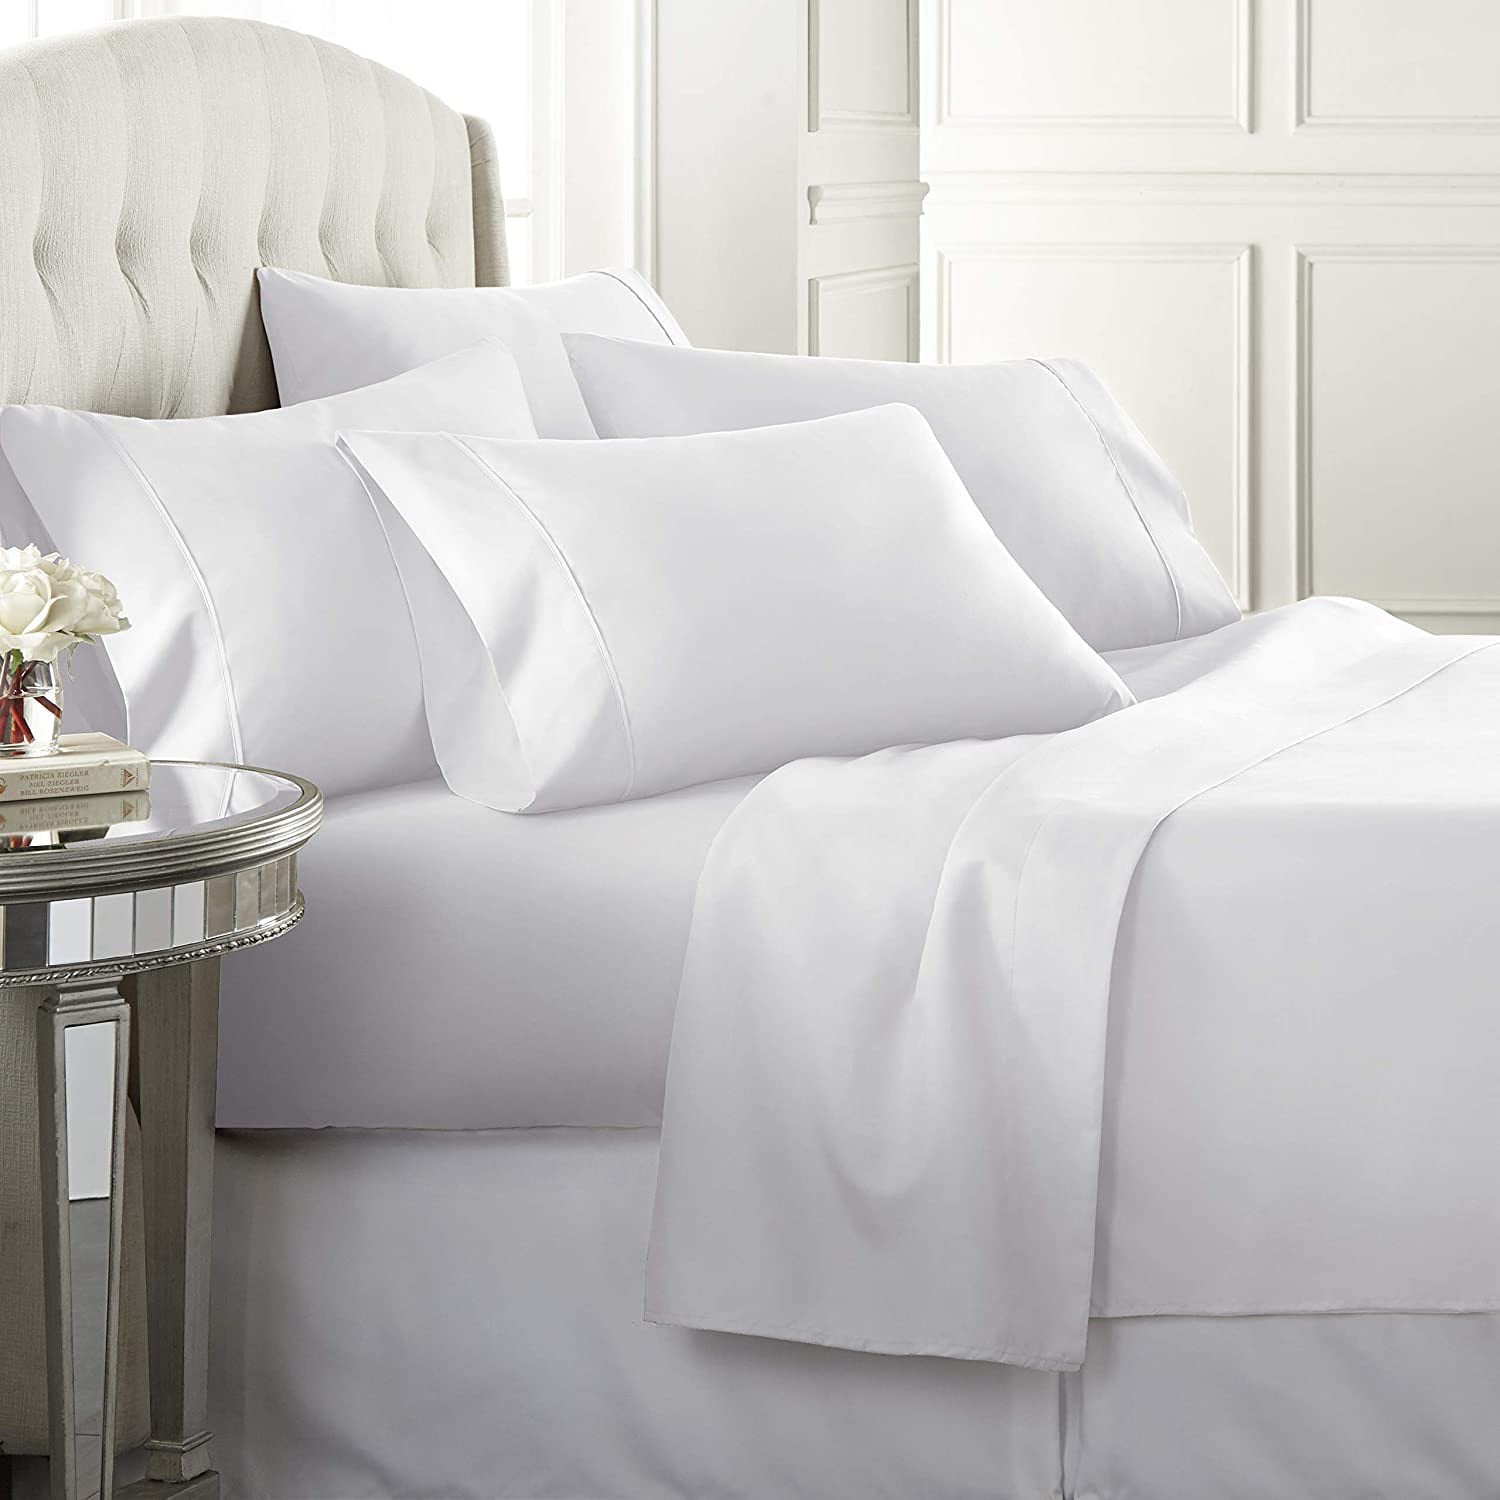 4PCS Hotel Luxury Soft 1800 Series Premium Bed Sheets Set King Size-Black Color 